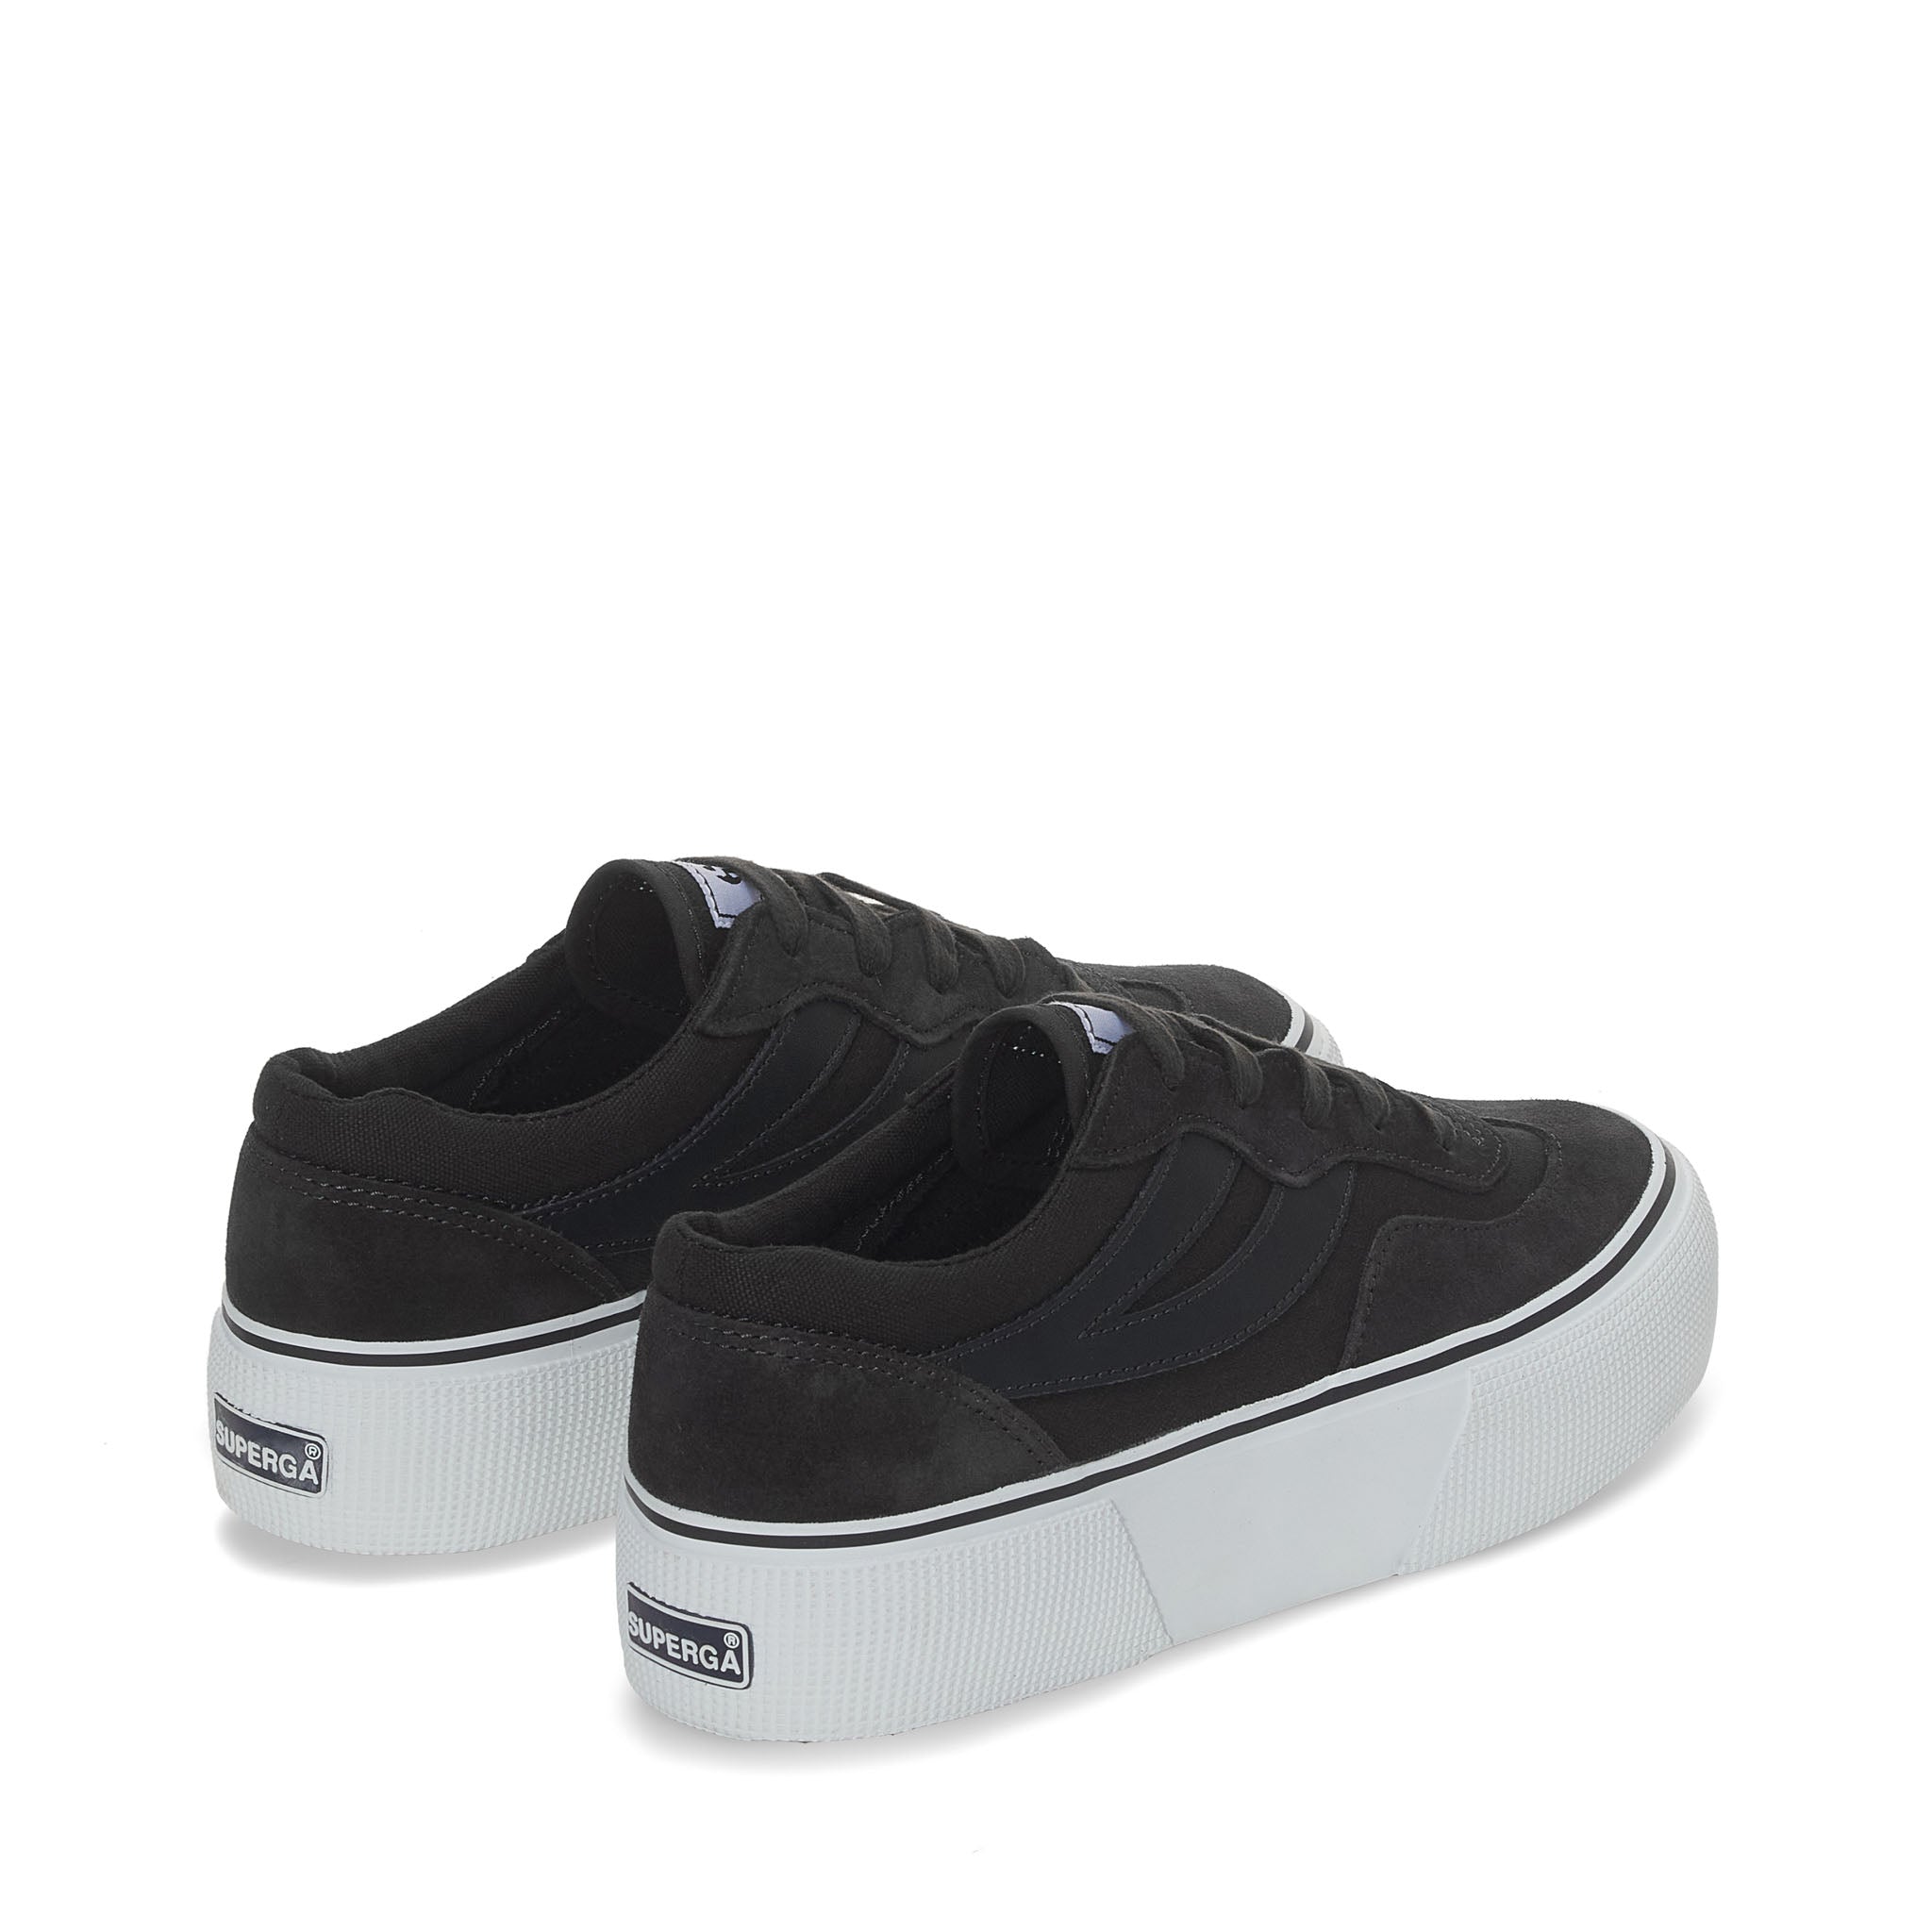 Superga 3041 Revolley Colorblock Platform Sneakers - Black Bristol Black Off White. Back view